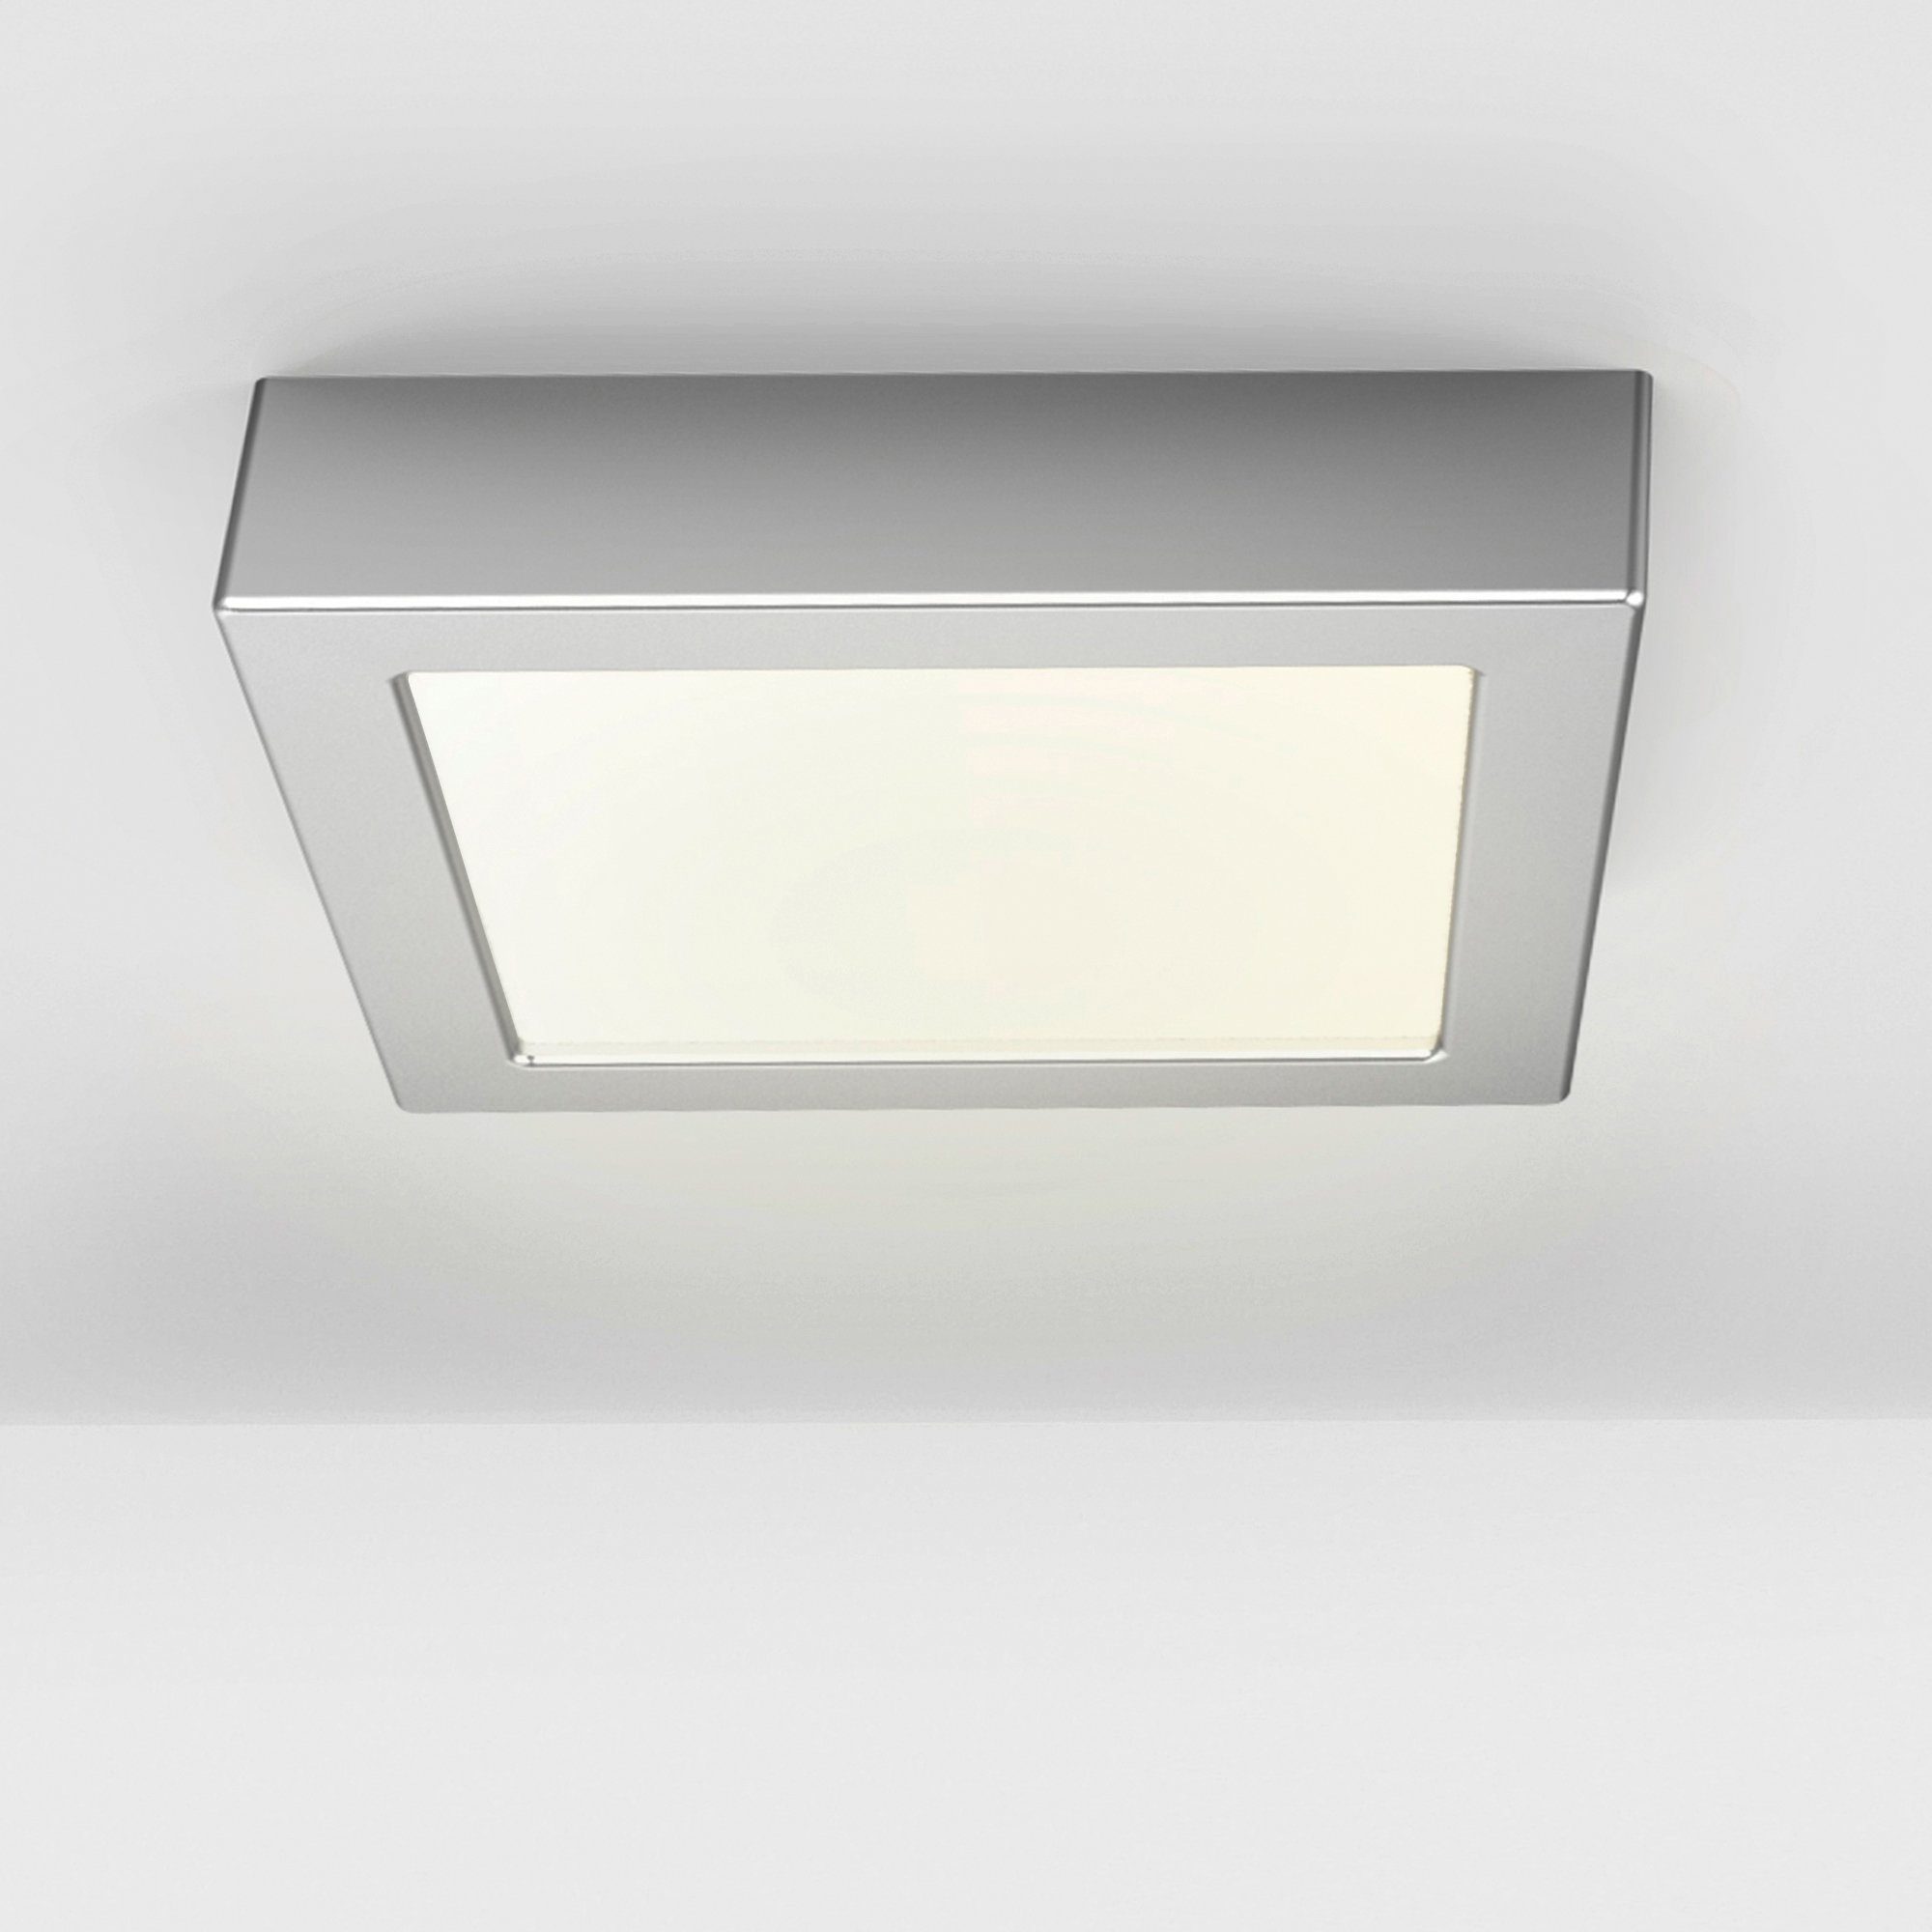 LED fest Warmweiß, Aufbaustrahler B.K.Licht Aufbauleuchte Aufputzspot Unterbauleuchte Garnet, integriert, 12W LED Lampe Panel LED